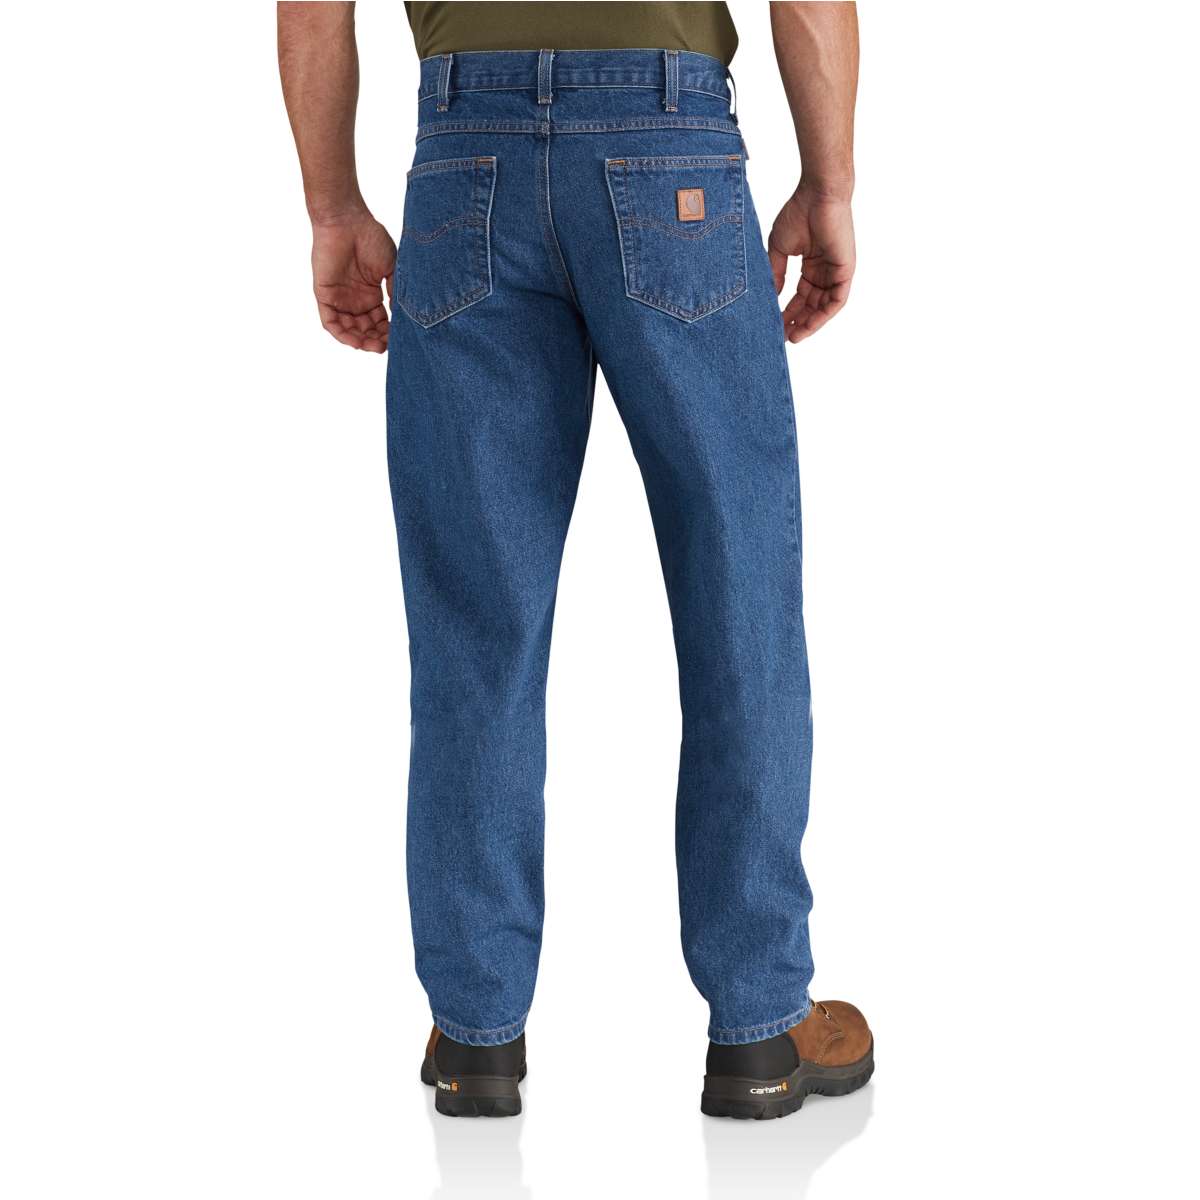 Carhartt Blue Denim Work Jeans Pants Men Size 40 x 30 Relaxed Fit - beyond  exchange